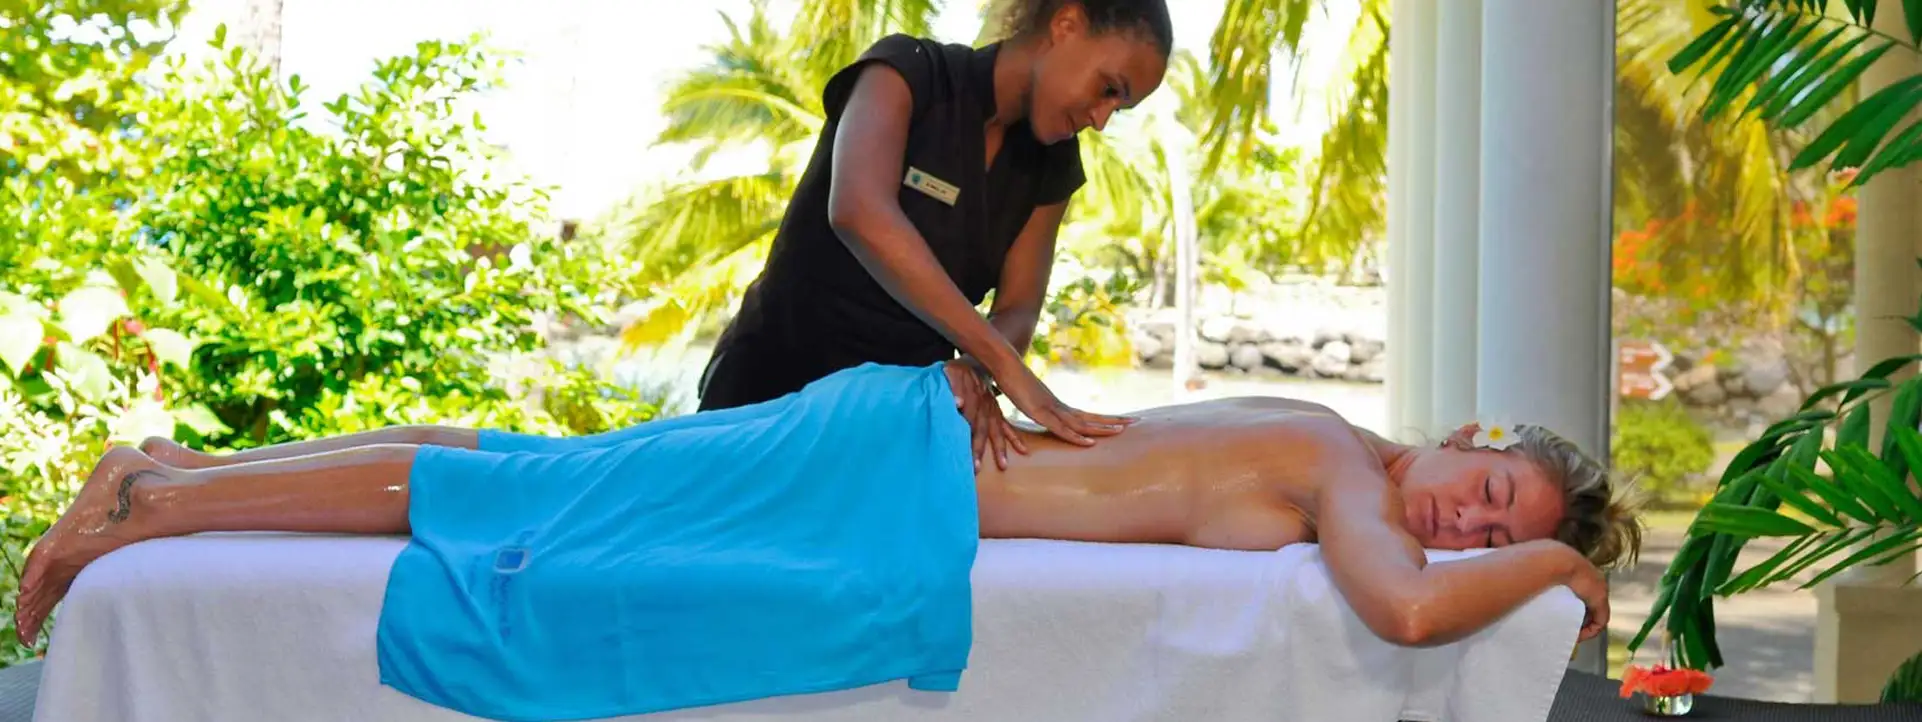 INTERCONTINENTAL-RESORT-TAHITI-woman-massage-best-honeymoons-tahiti